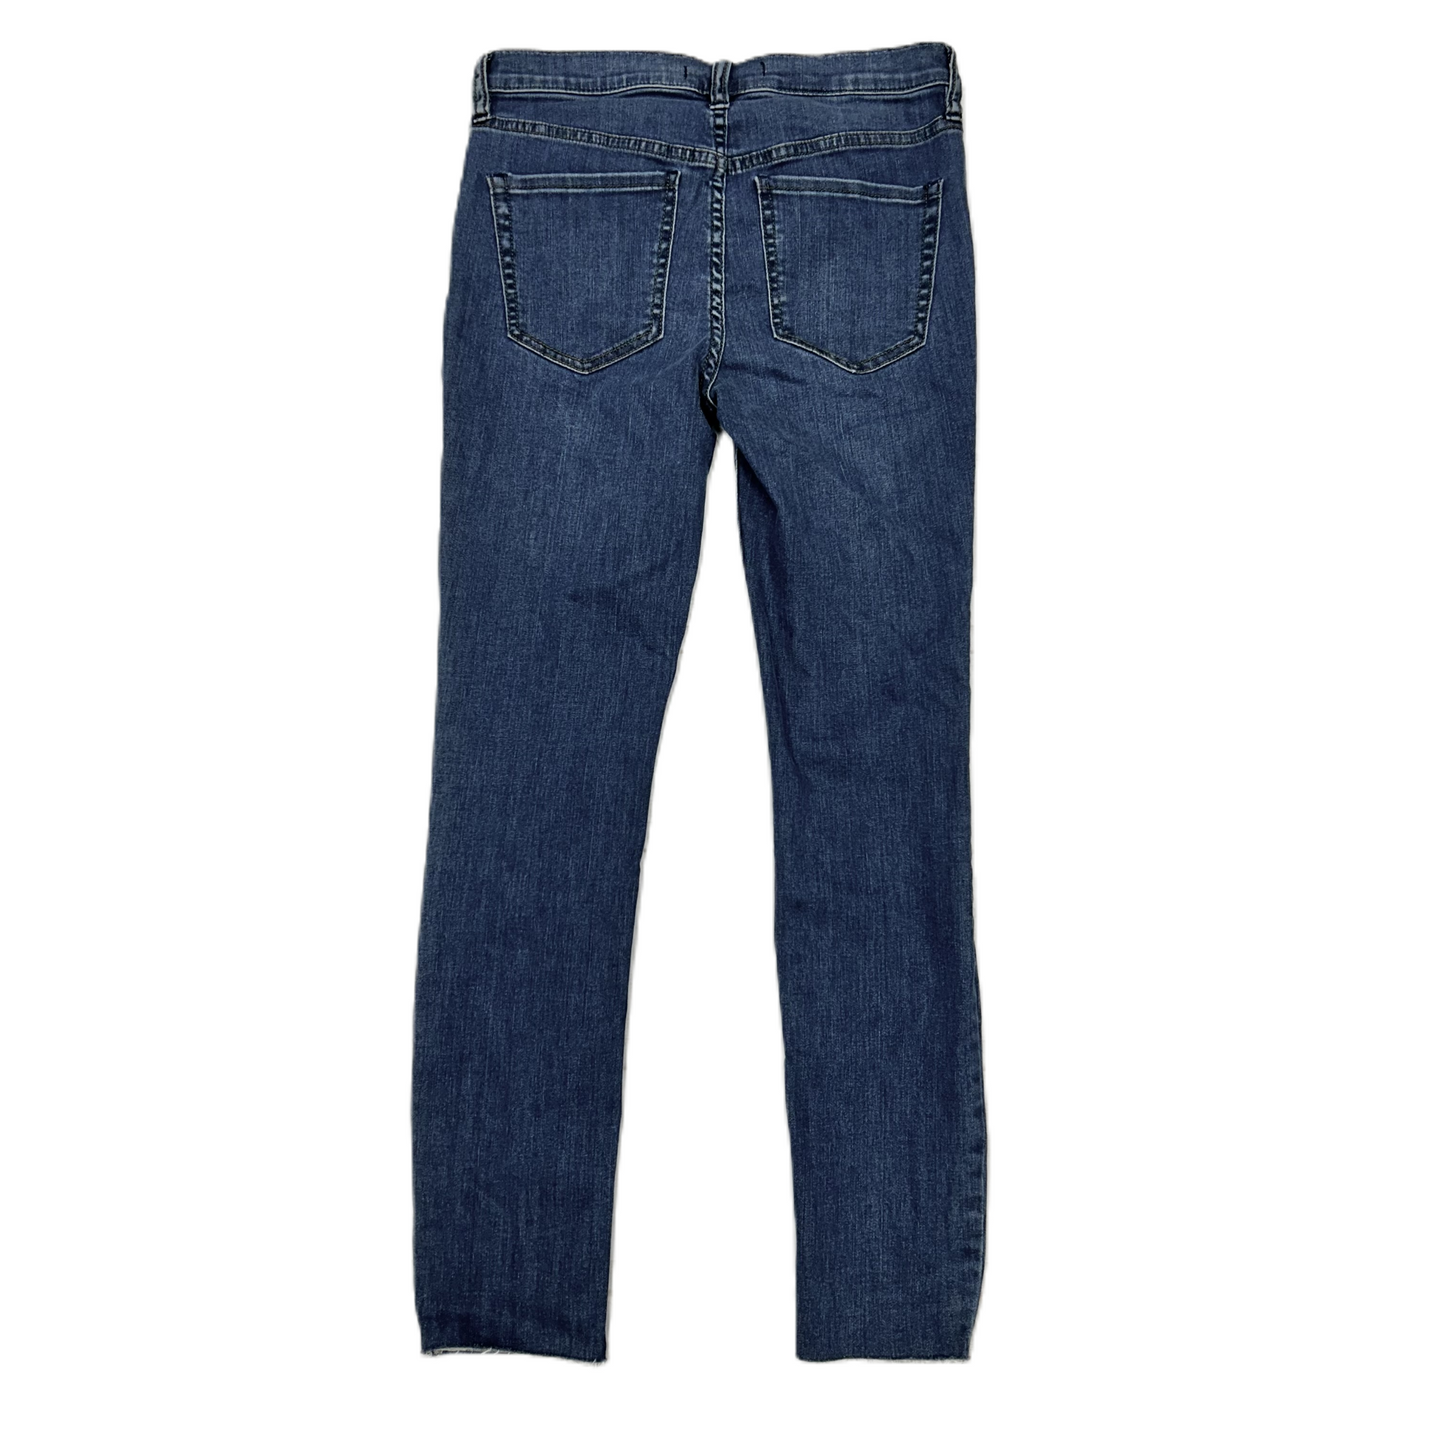 Denim Blue Jeans Skinny By Free People, Size: 4